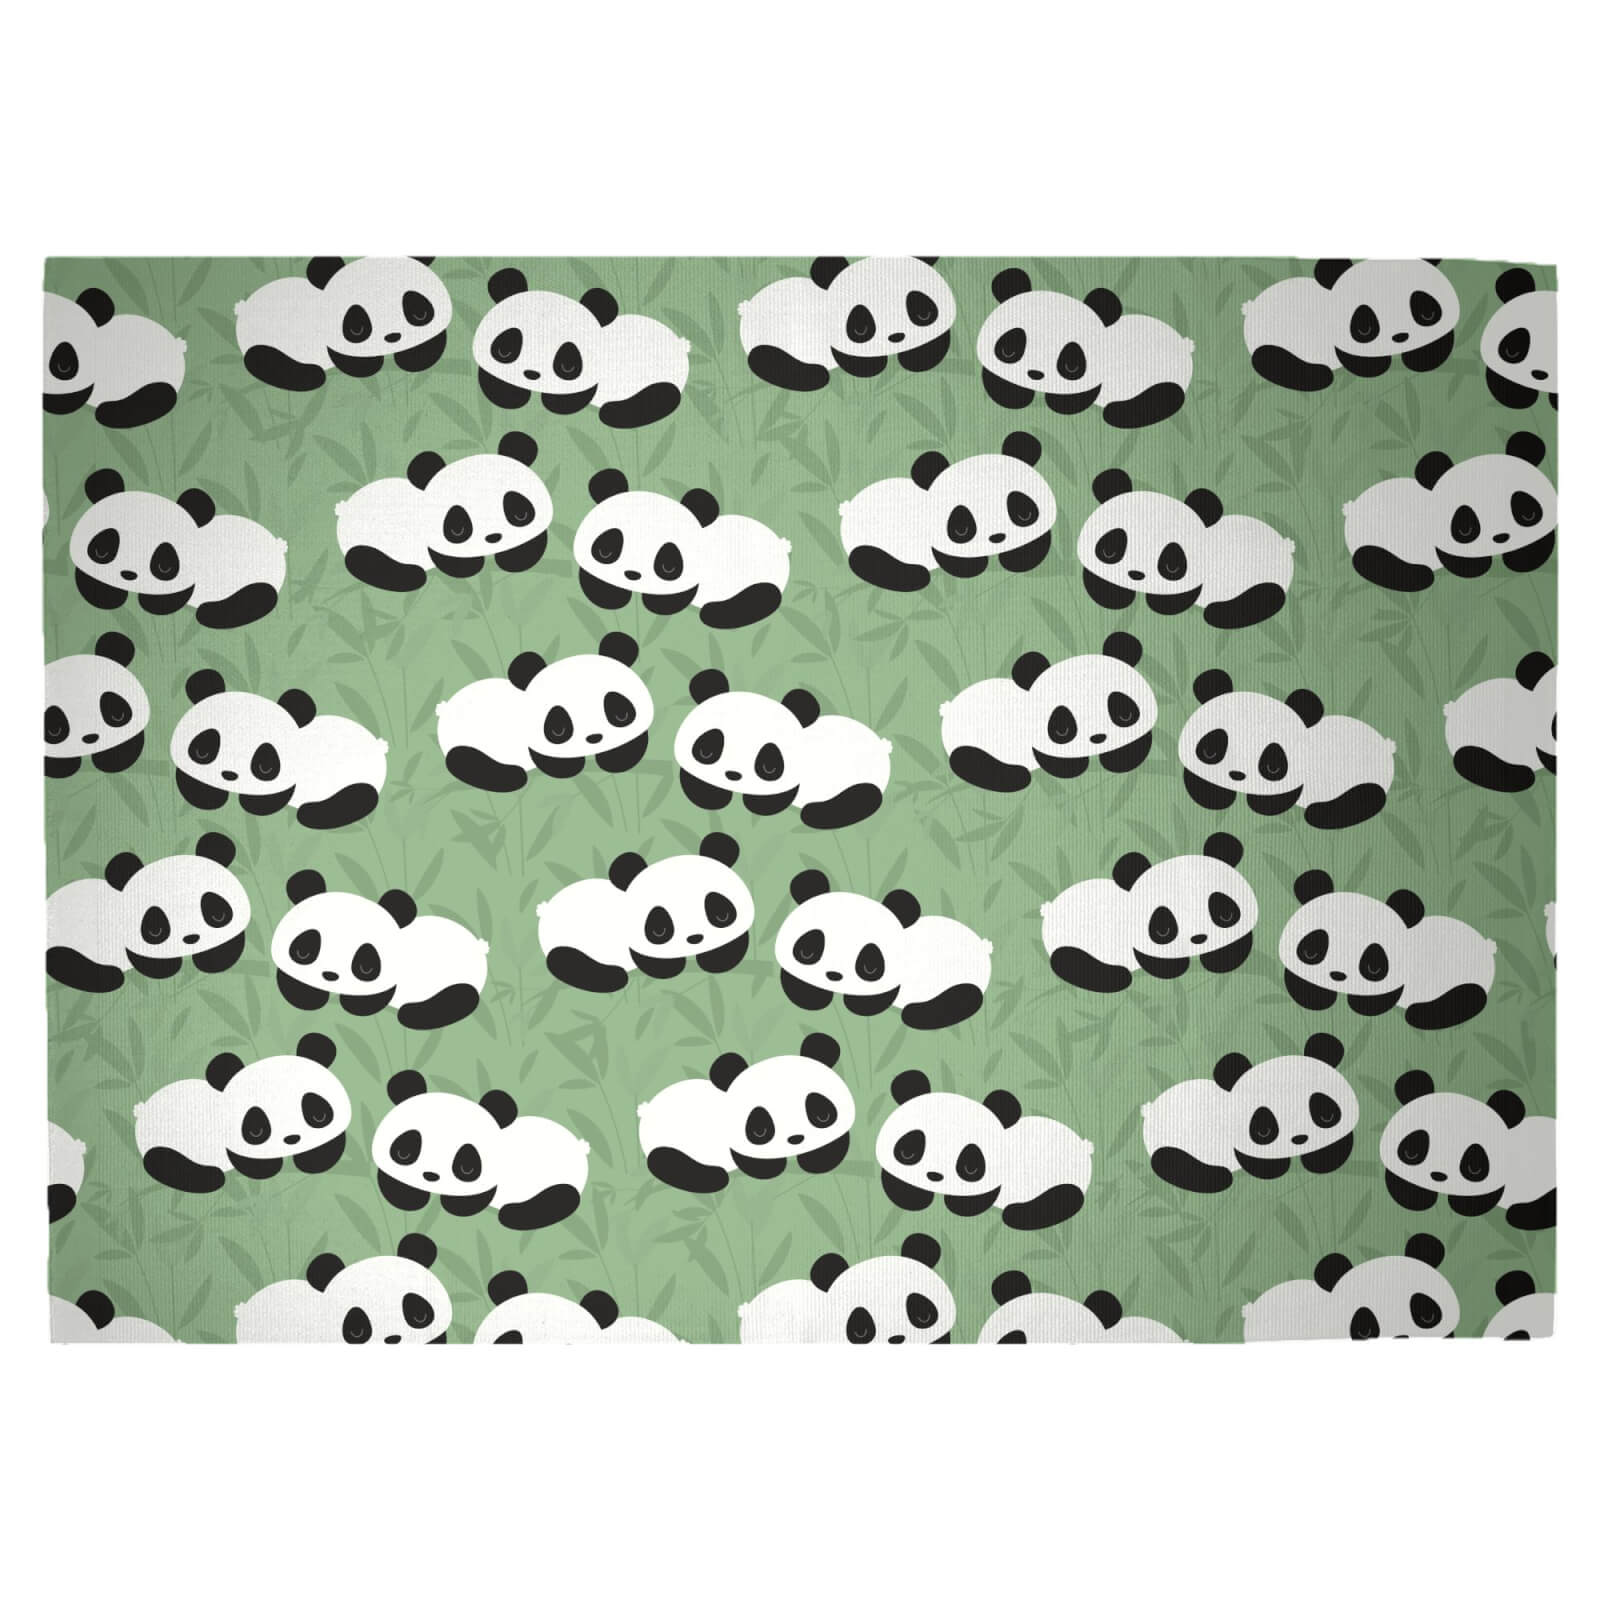 Panda Slumber Party Woven Rug - Large